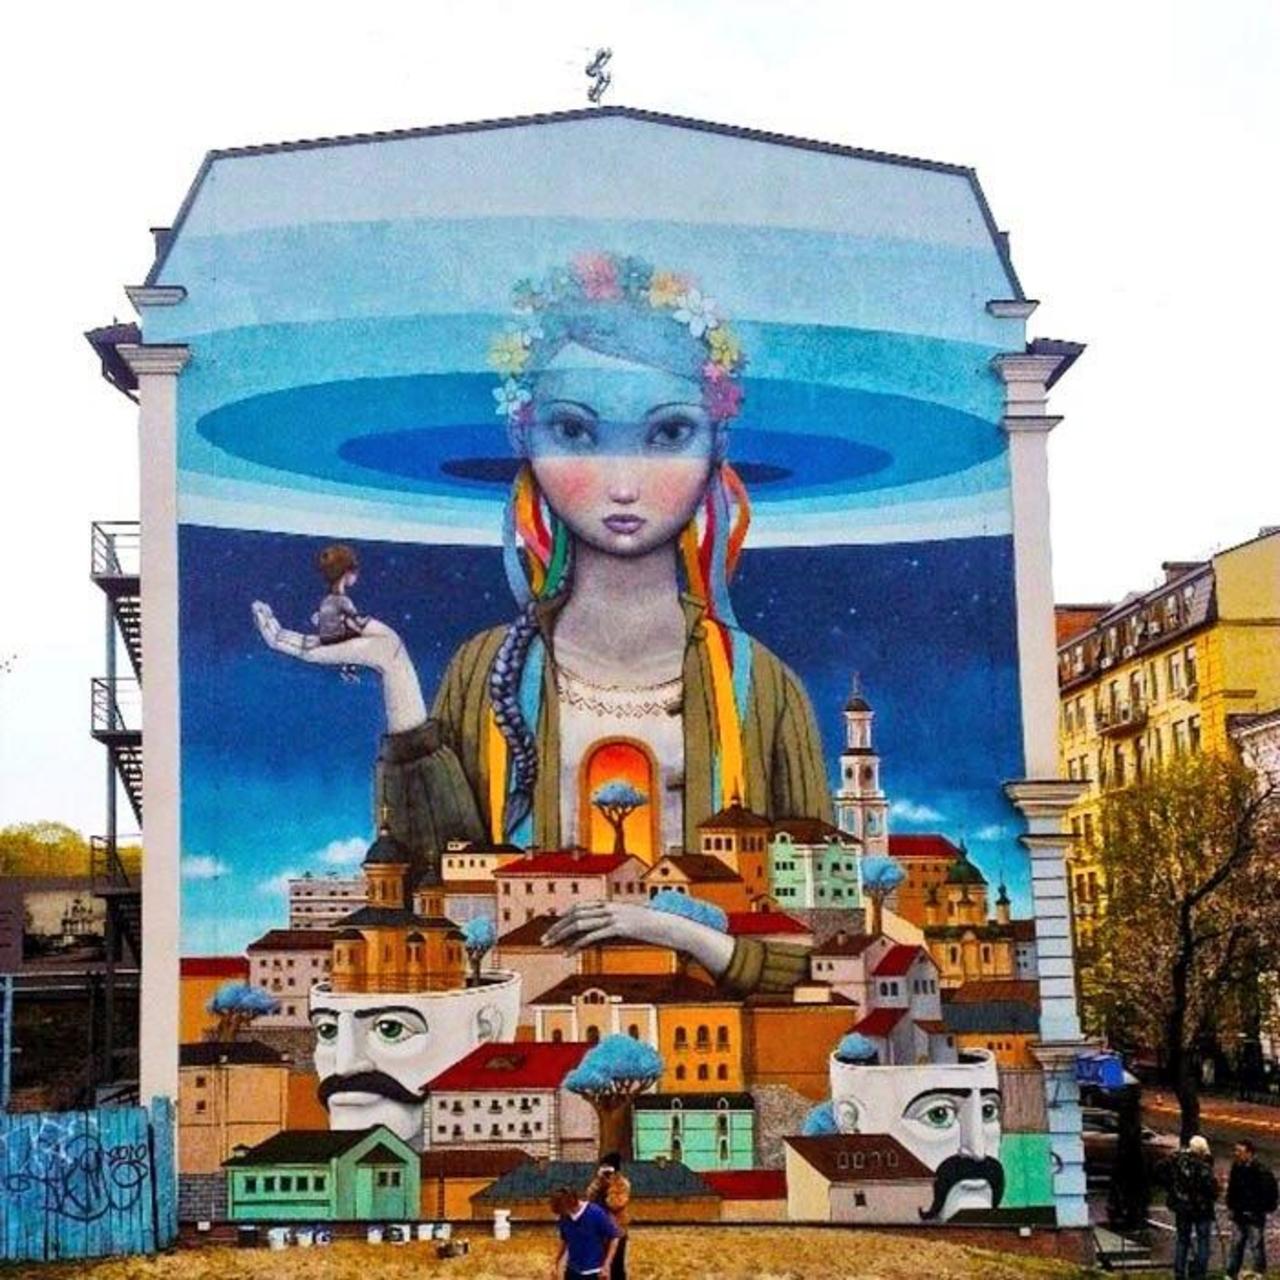 "RT @gianni_nigia @Pitchuskita: Seth x Kislow Kiev, Ukraine #streetart #art #urbanart #graffiti #mural http://t.co/SkYKHRs2Om"